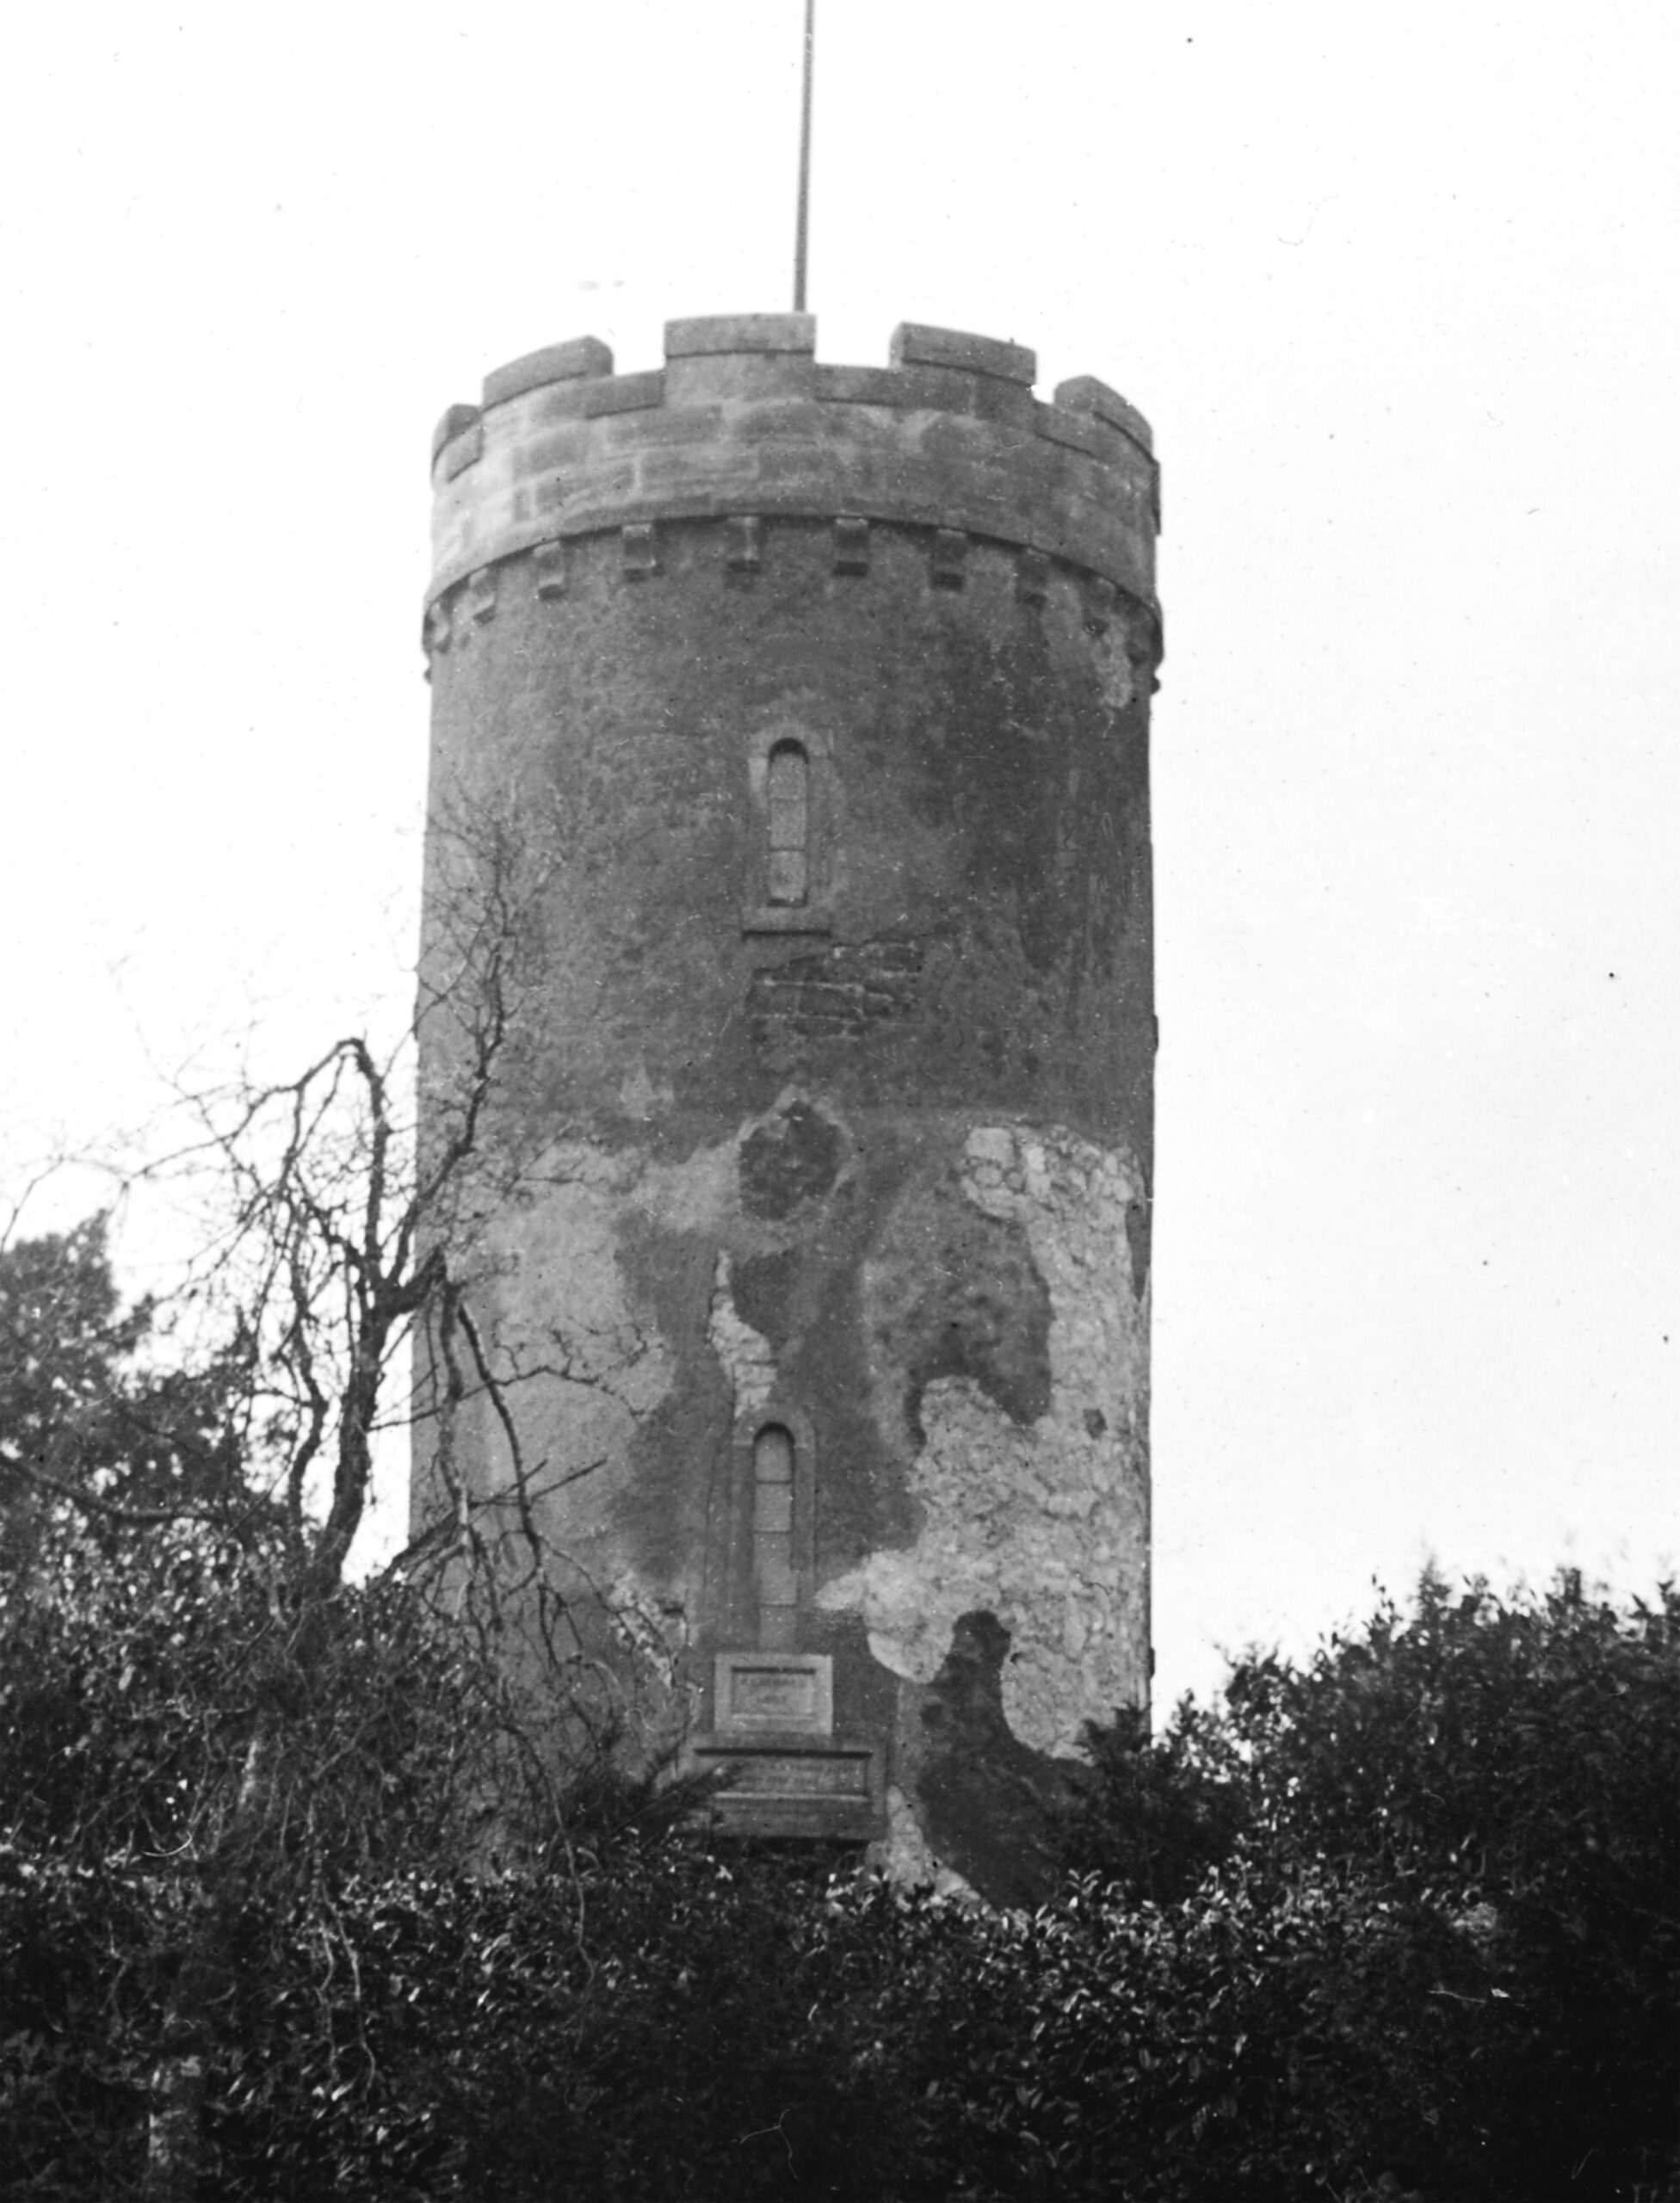 Tayport Heritage Trail - Board 7 - Waterloo Tower early 1900s